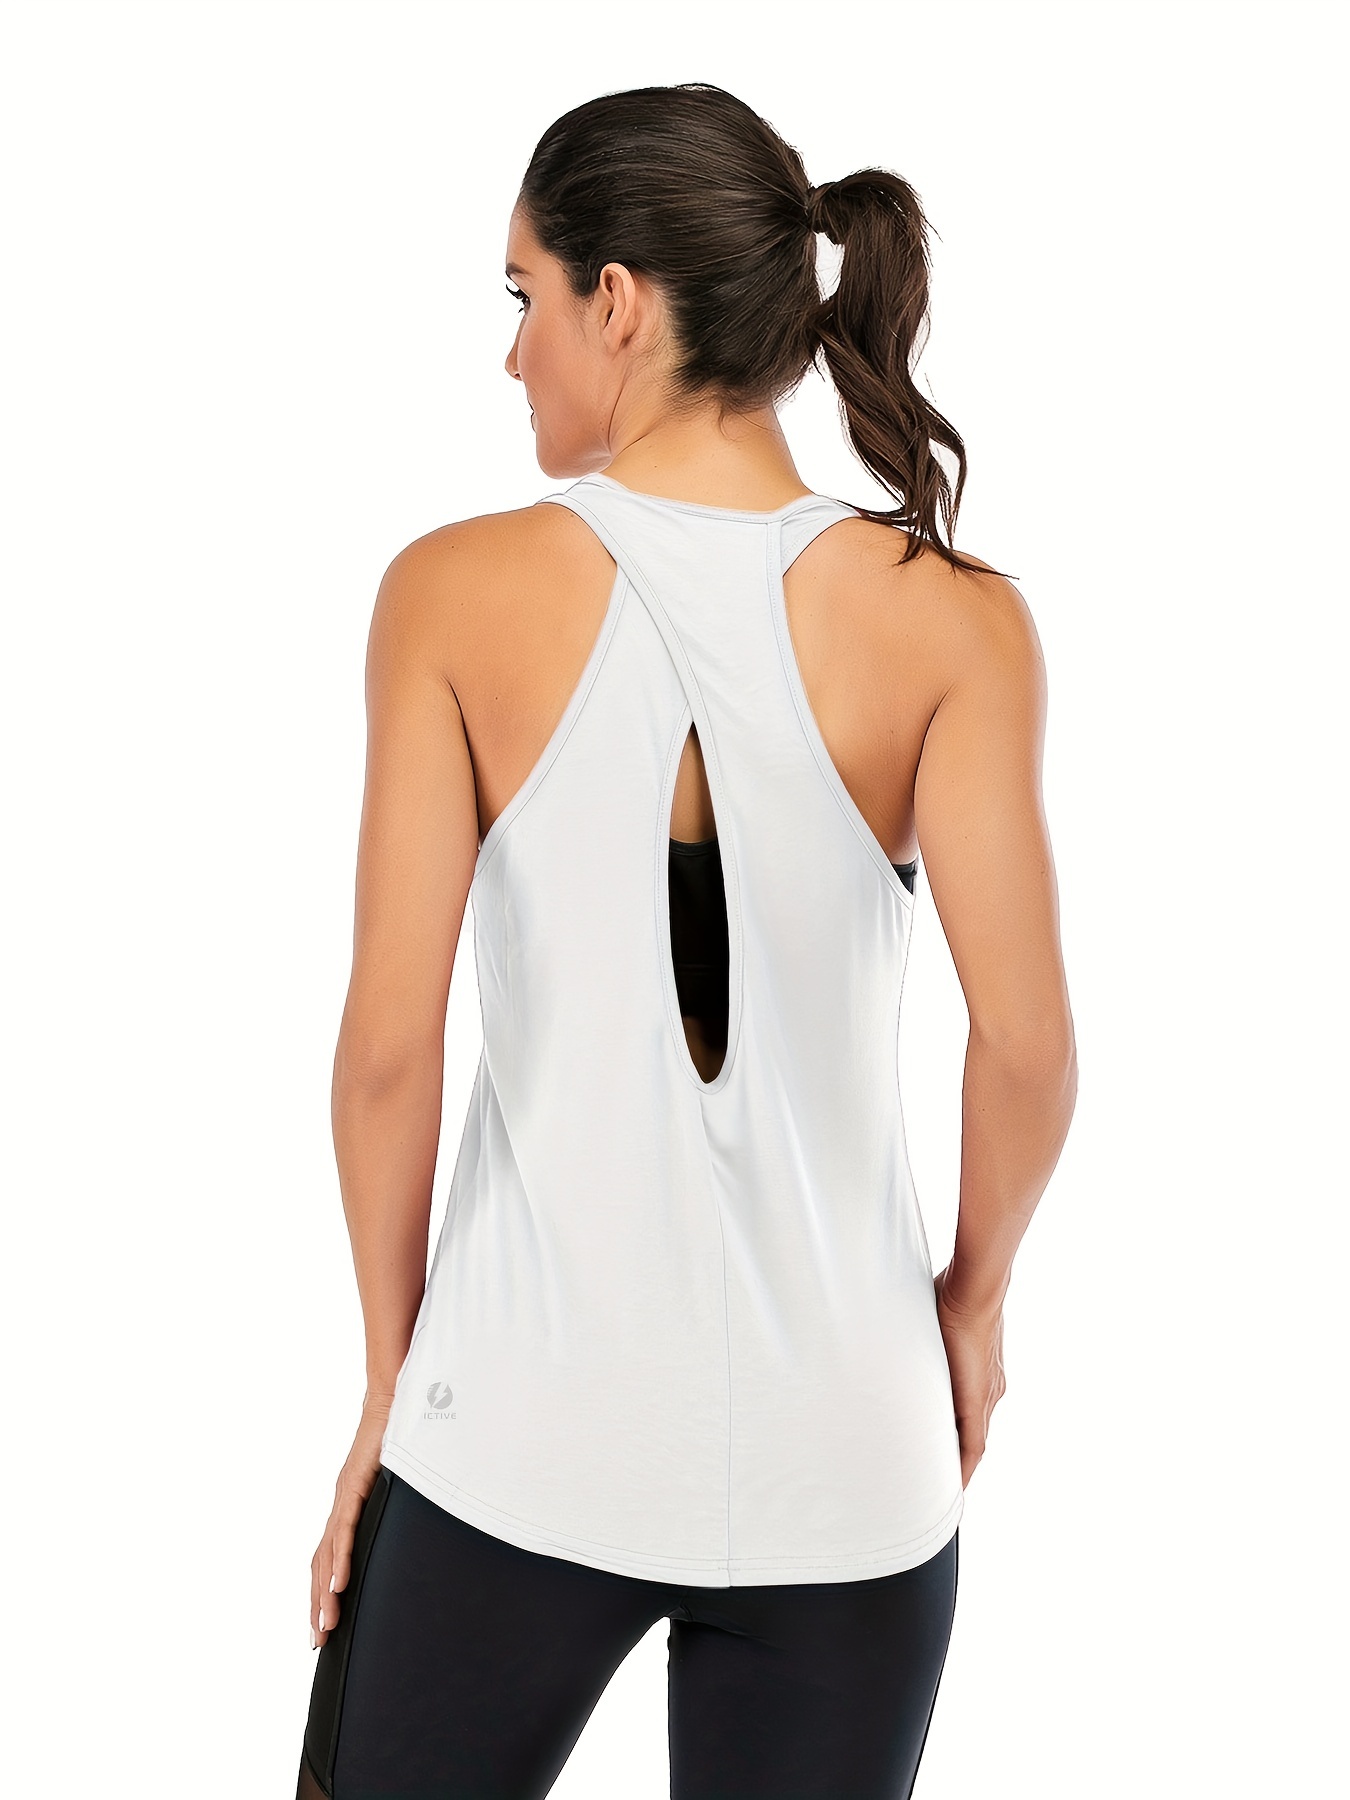 Sleeveless T-shirt with open back - Women